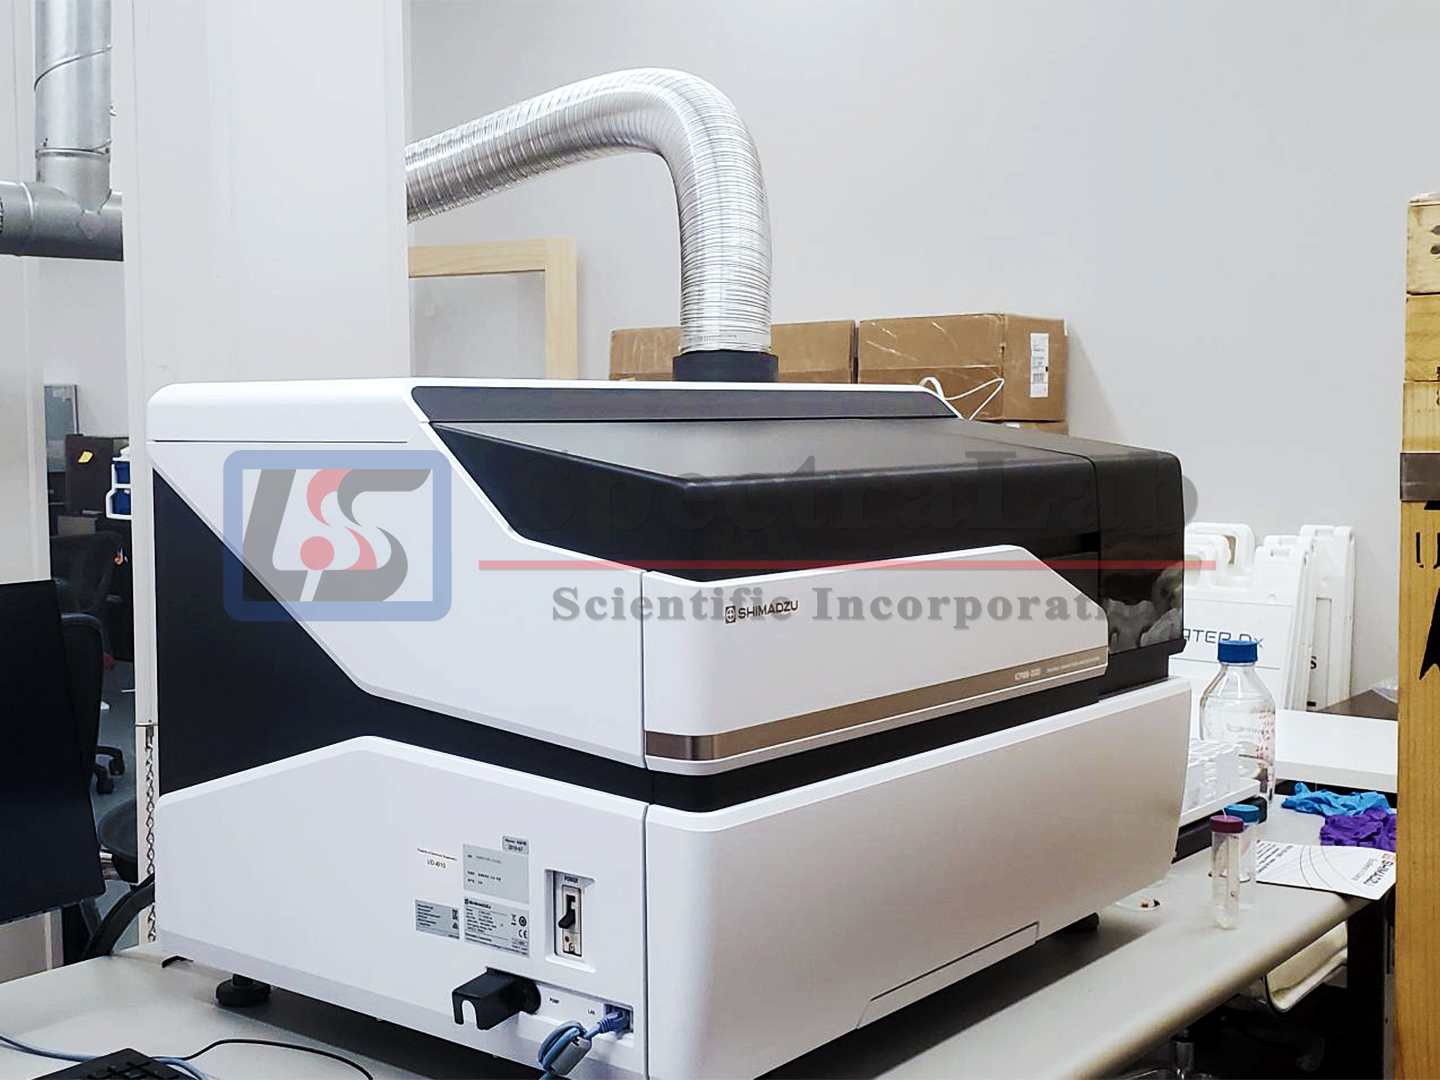 Mass spectrometer - PlasmaMS 300 - NCS Testing Technology Co., Ltd. - ICP-MS  / laboratory / for food analysis